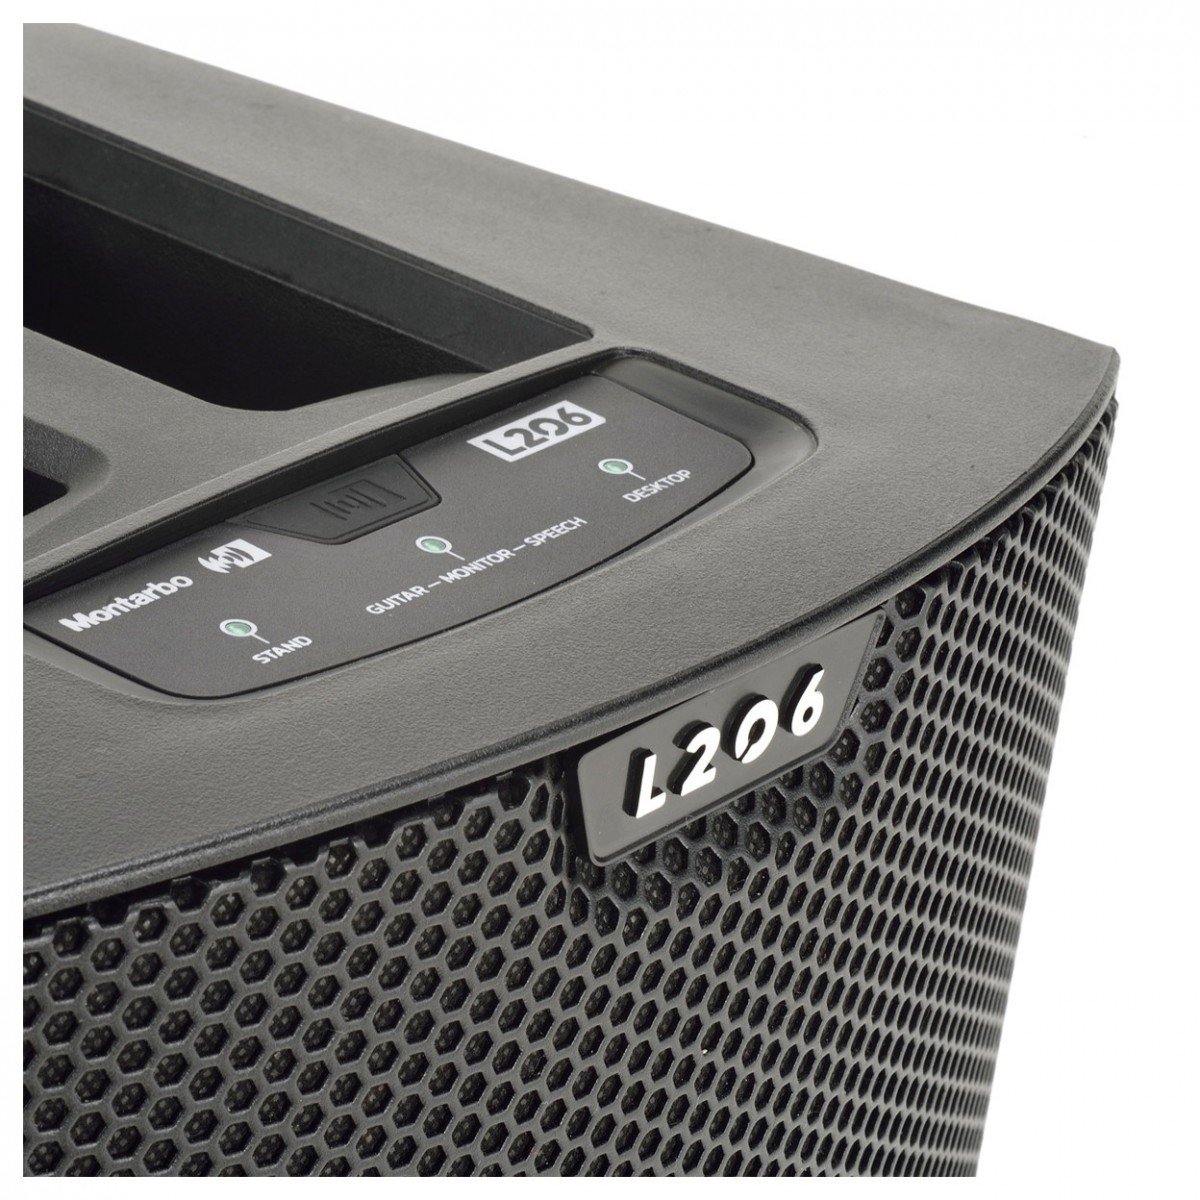 Montarbo L206 Portable Multi-Position Speaker - DY Pro Audio